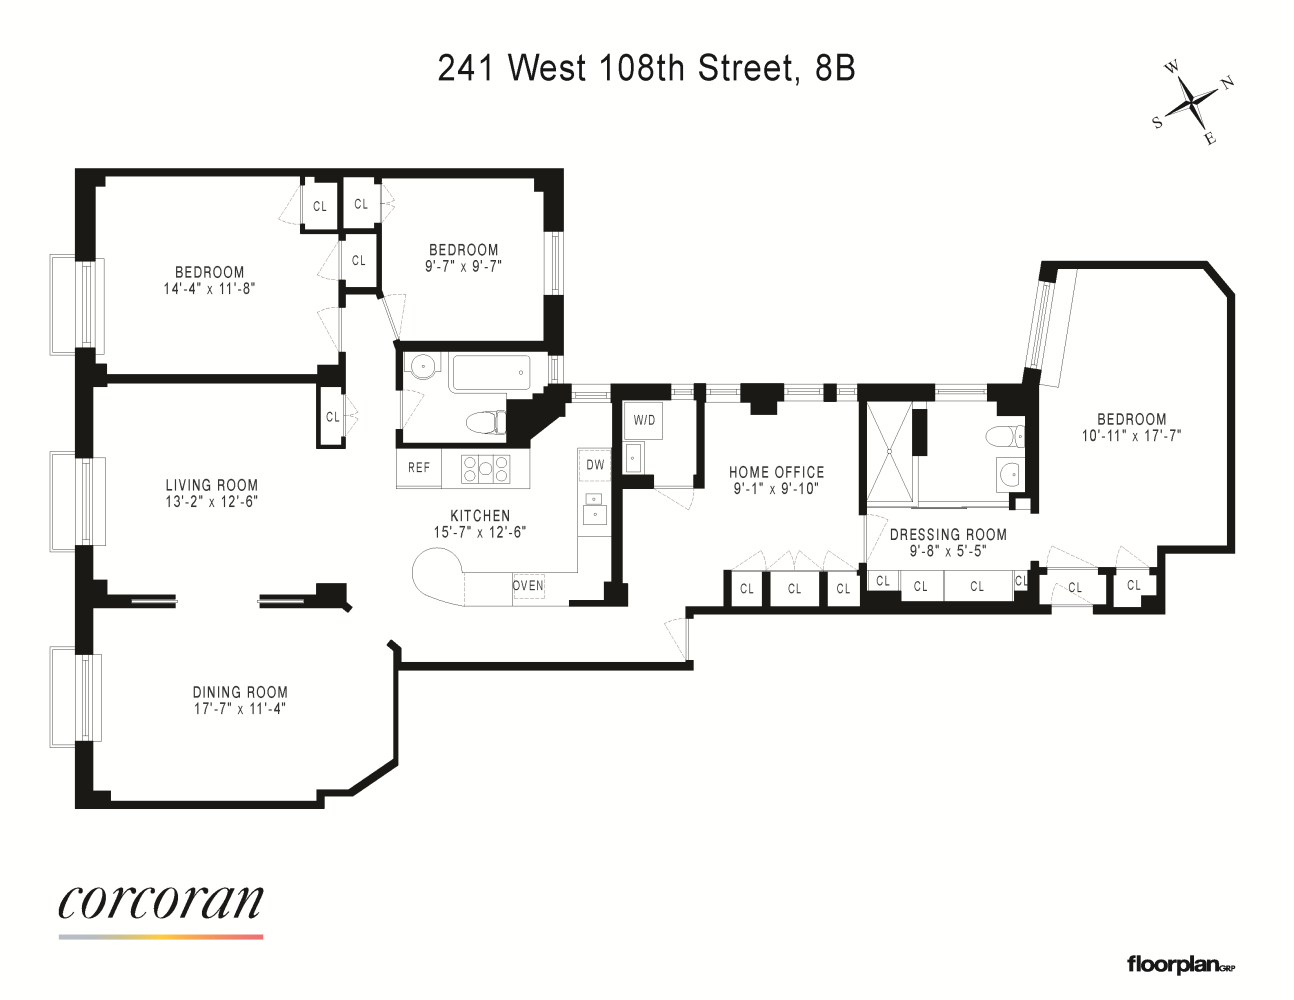 Floorplan for 241 West 108th Street, 8B